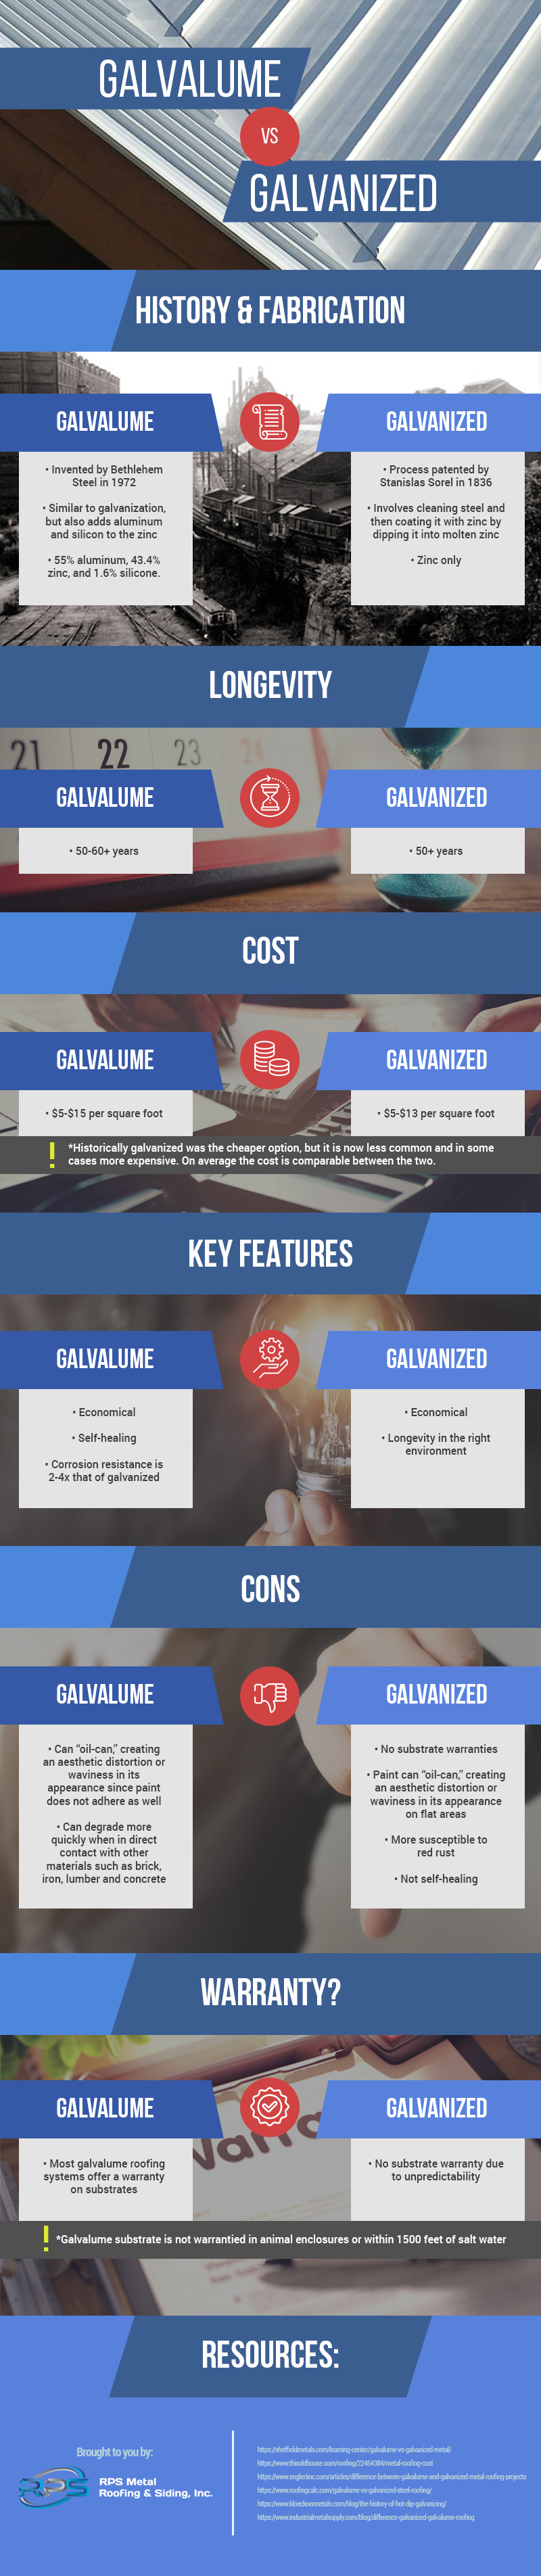 galvalume vs galvanized infographic